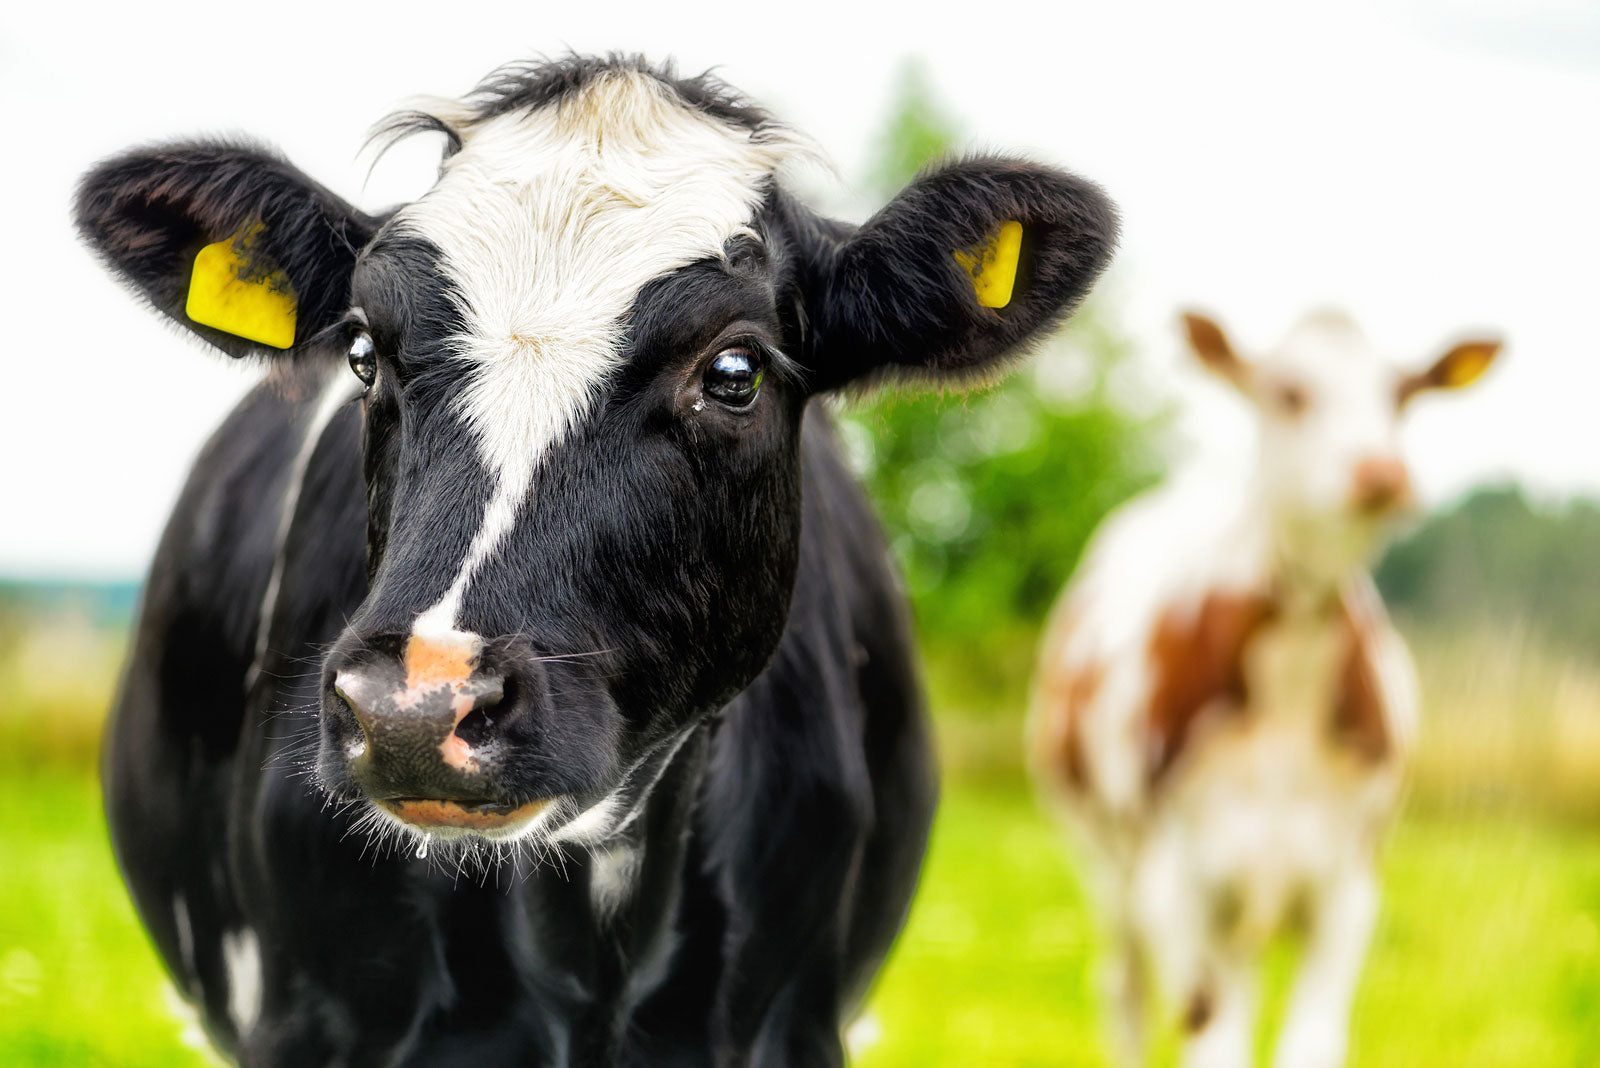 Cow - Compassion in World Farming